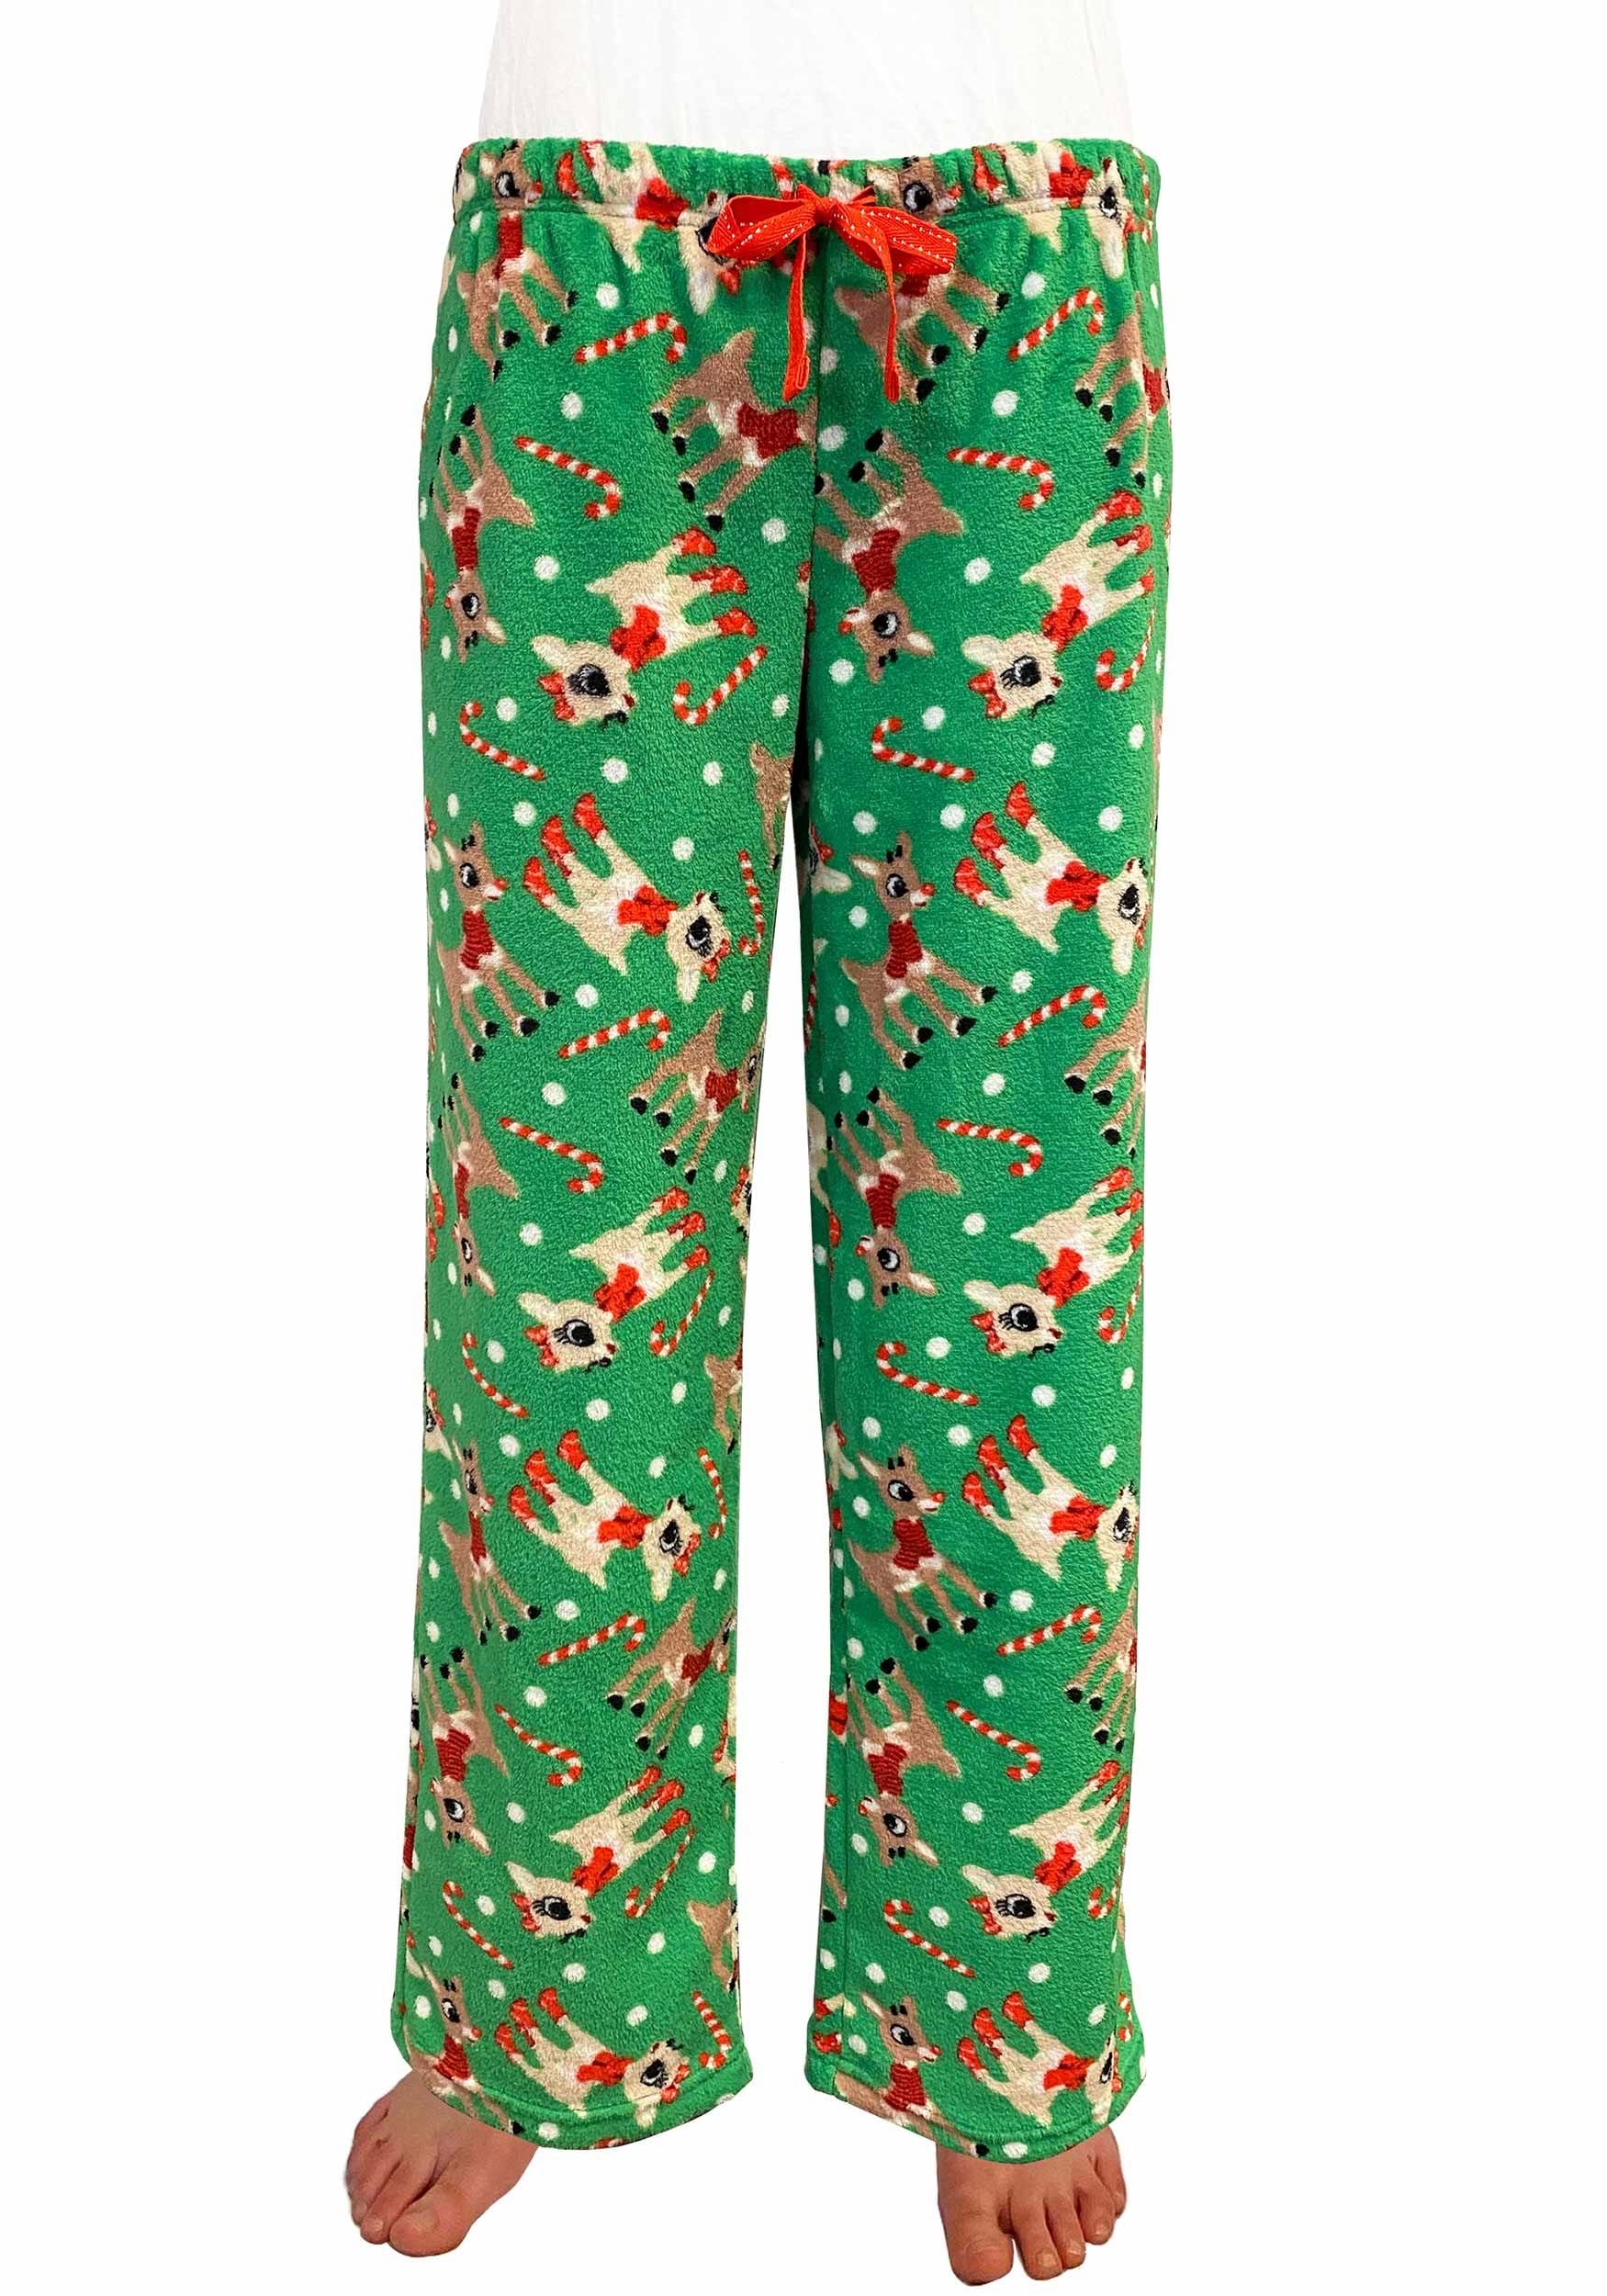 Intimates & Sleepwear, Fuzzy Christmas Pajama Pants